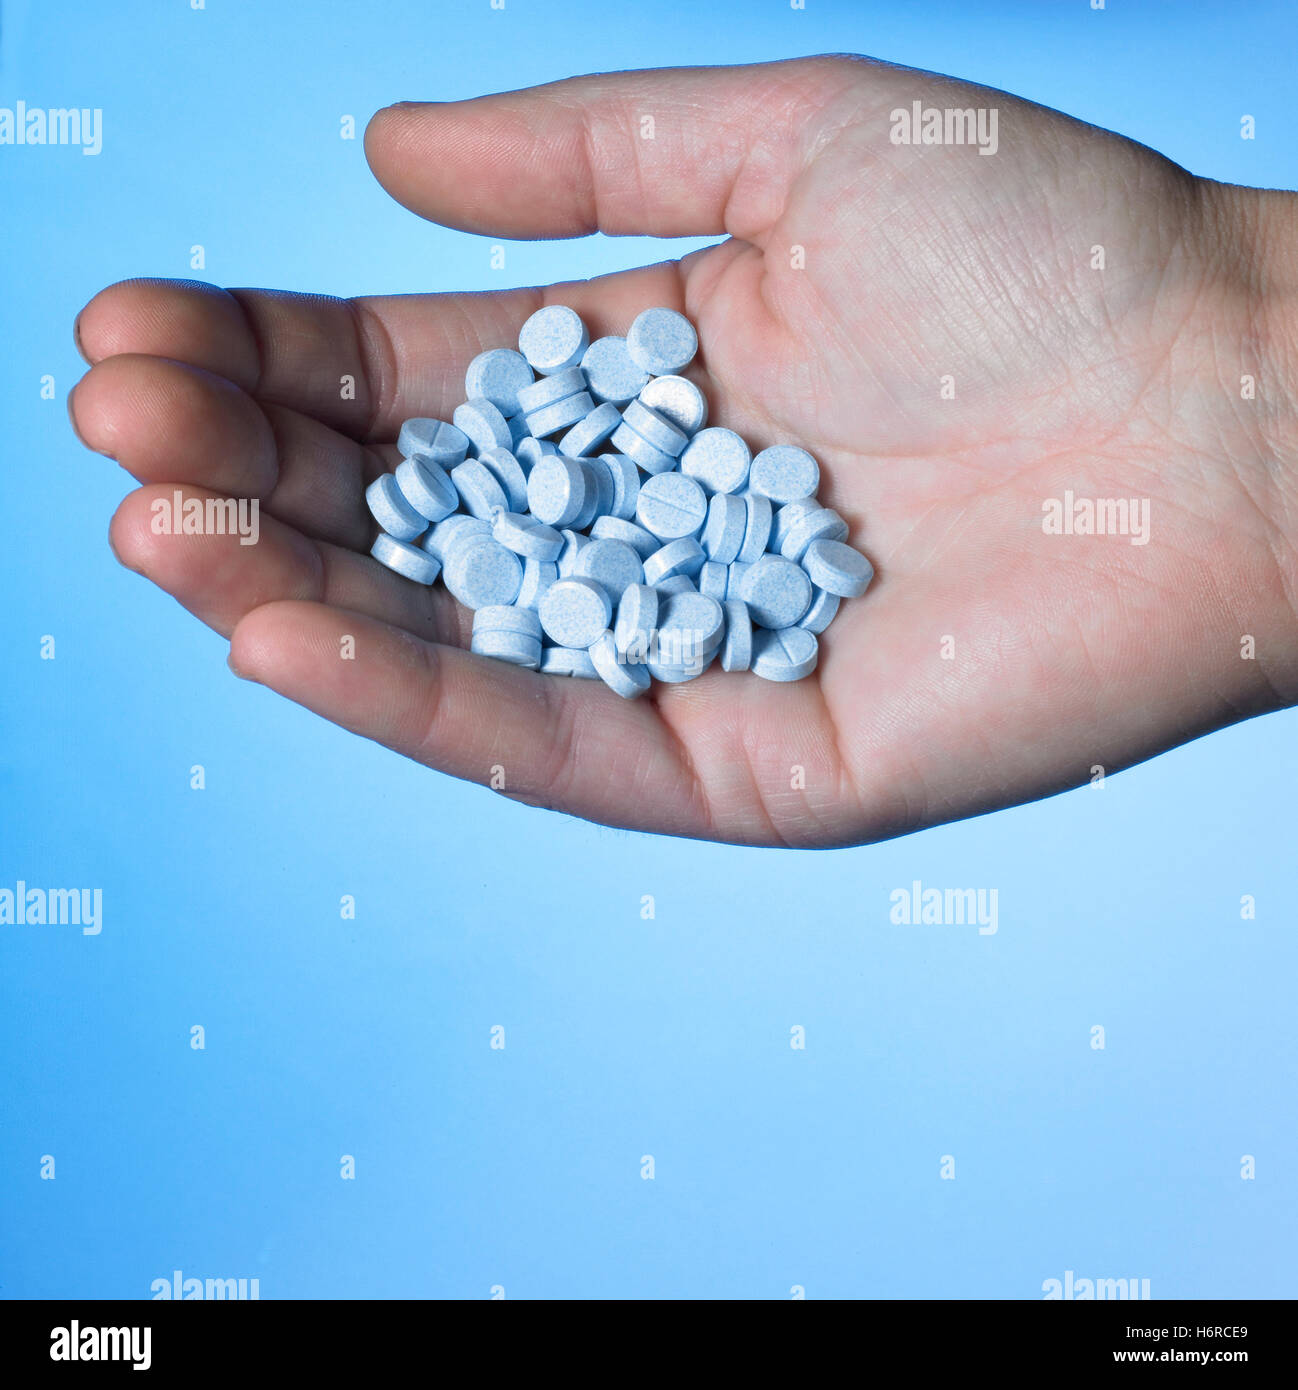 hand holding blue pills Stock Photo - Alamy